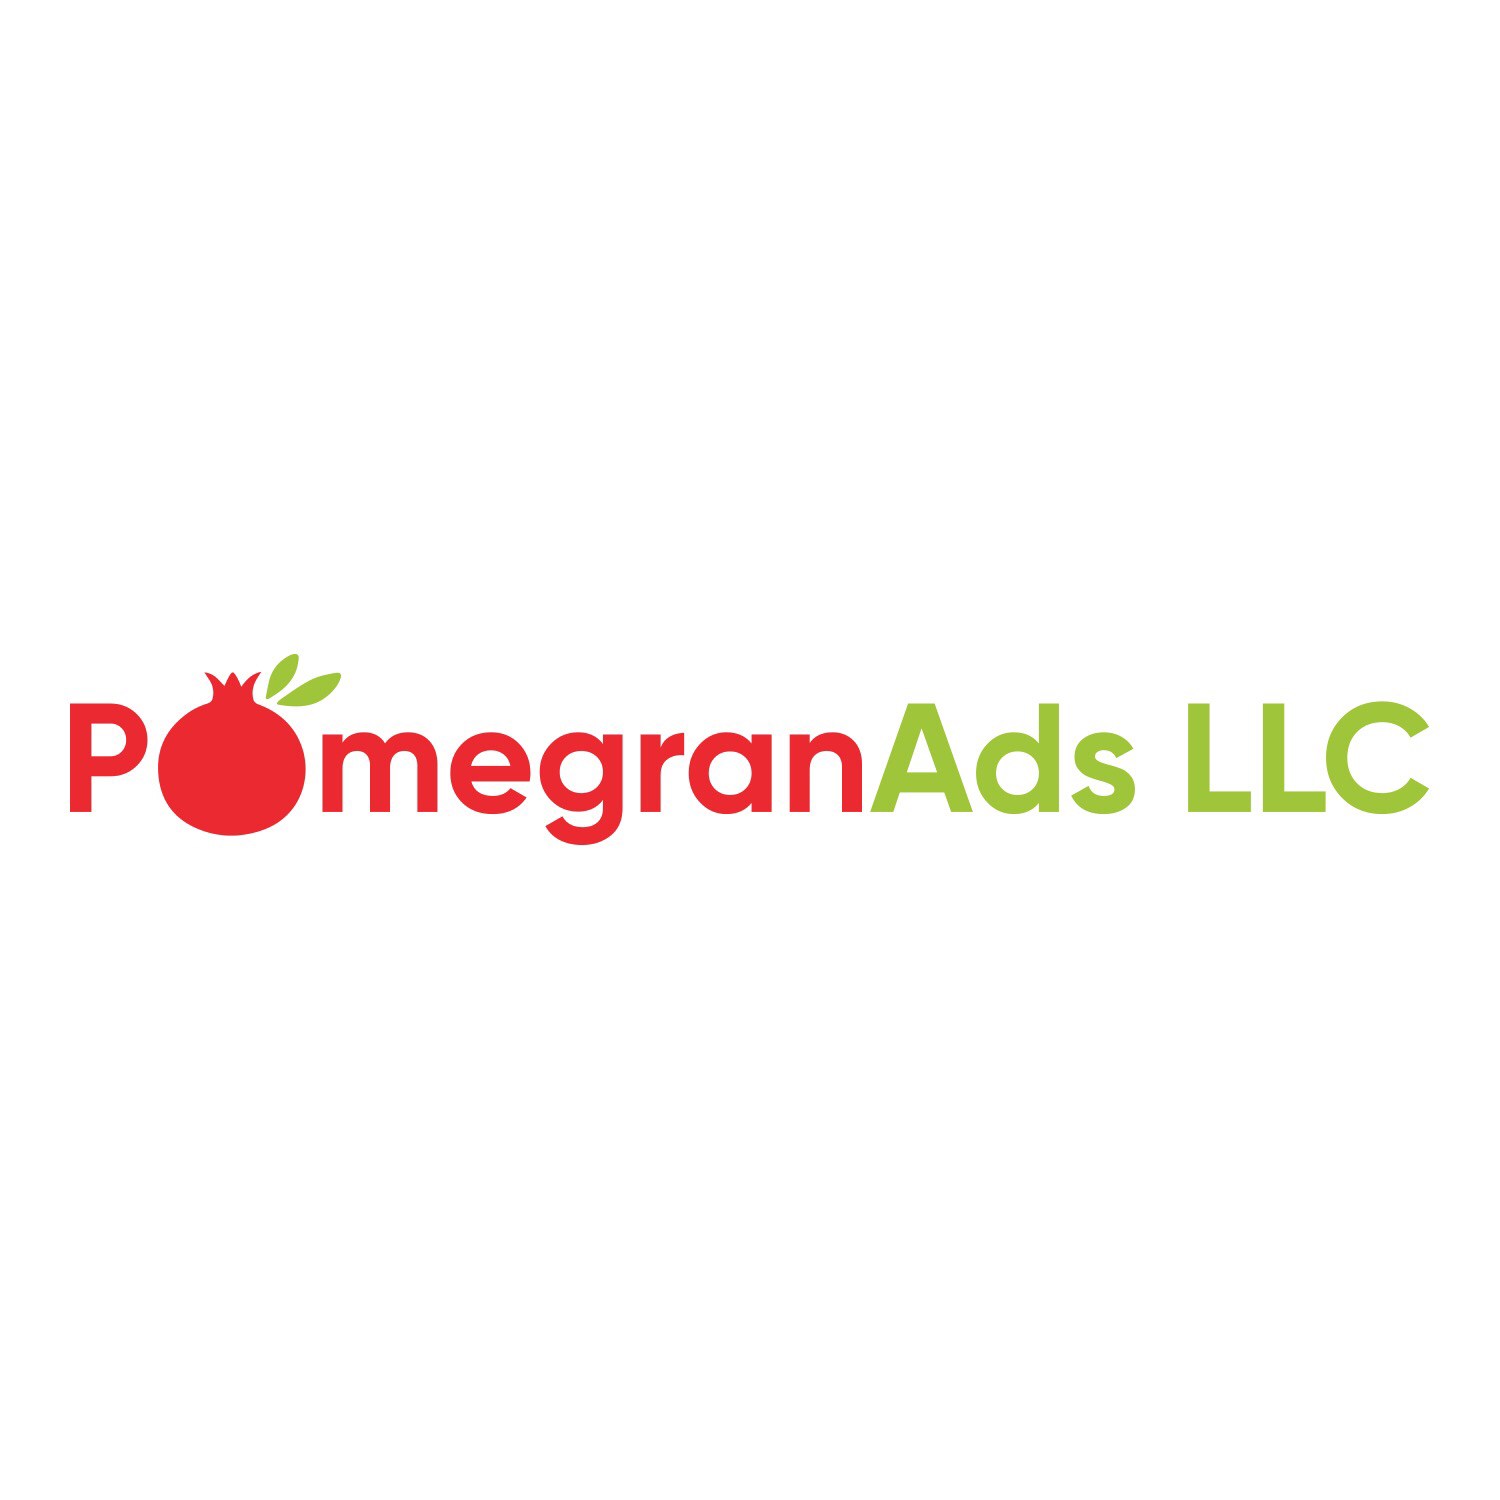 PomegranAds LLC